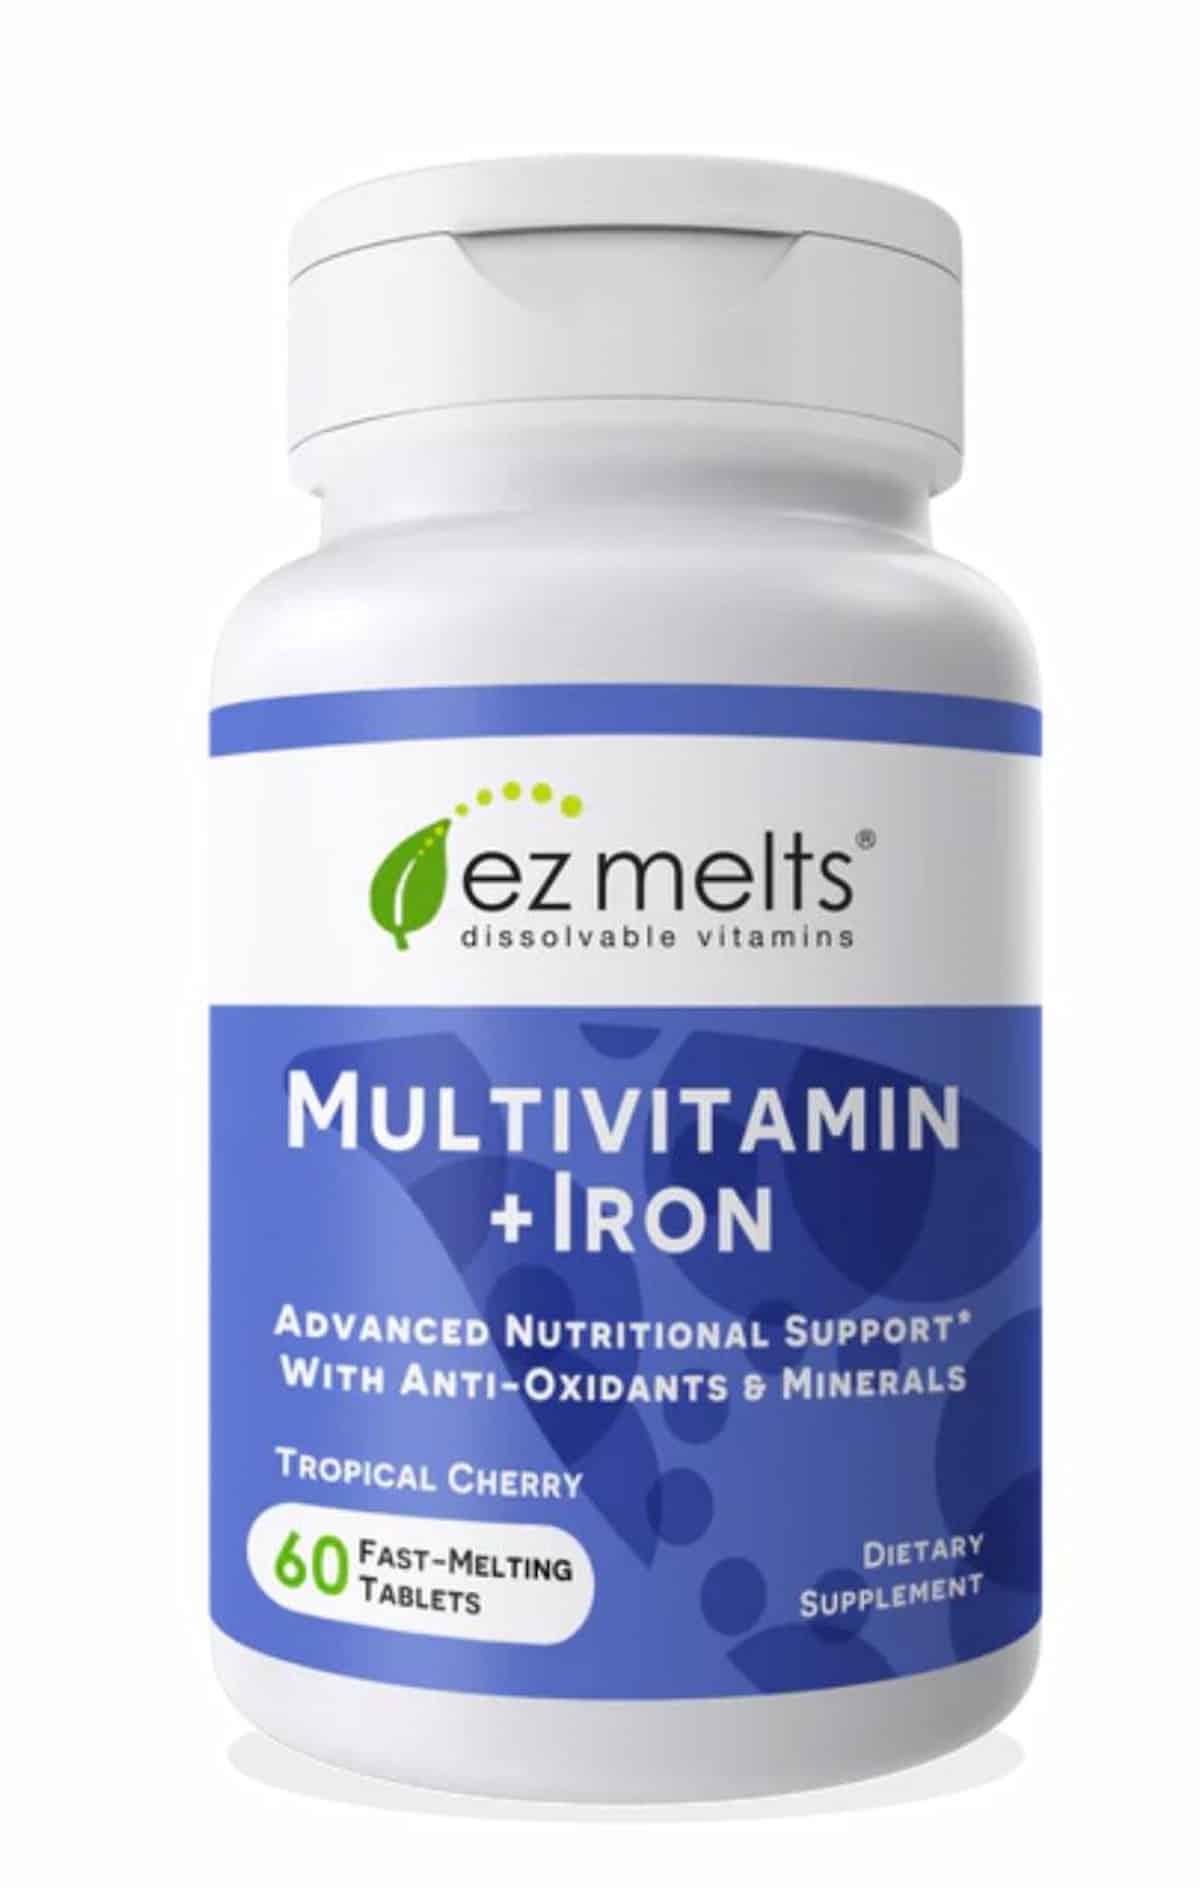 A bottle of EZ Melts vegan multivitamins with iron.